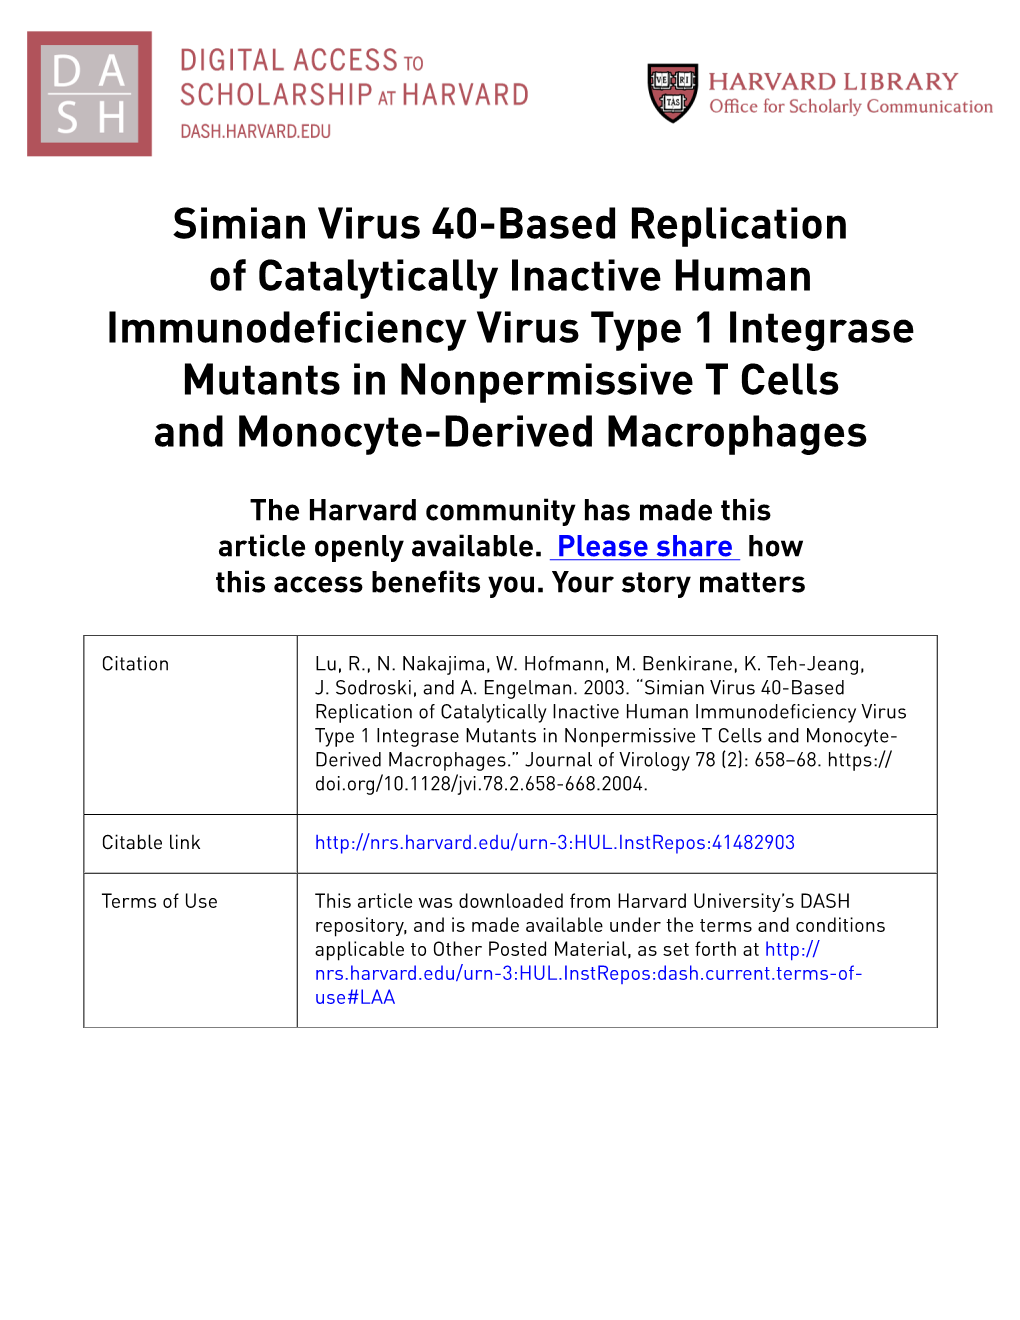 Simian Virus 40-Based Replication of Catalytically Inactive Human